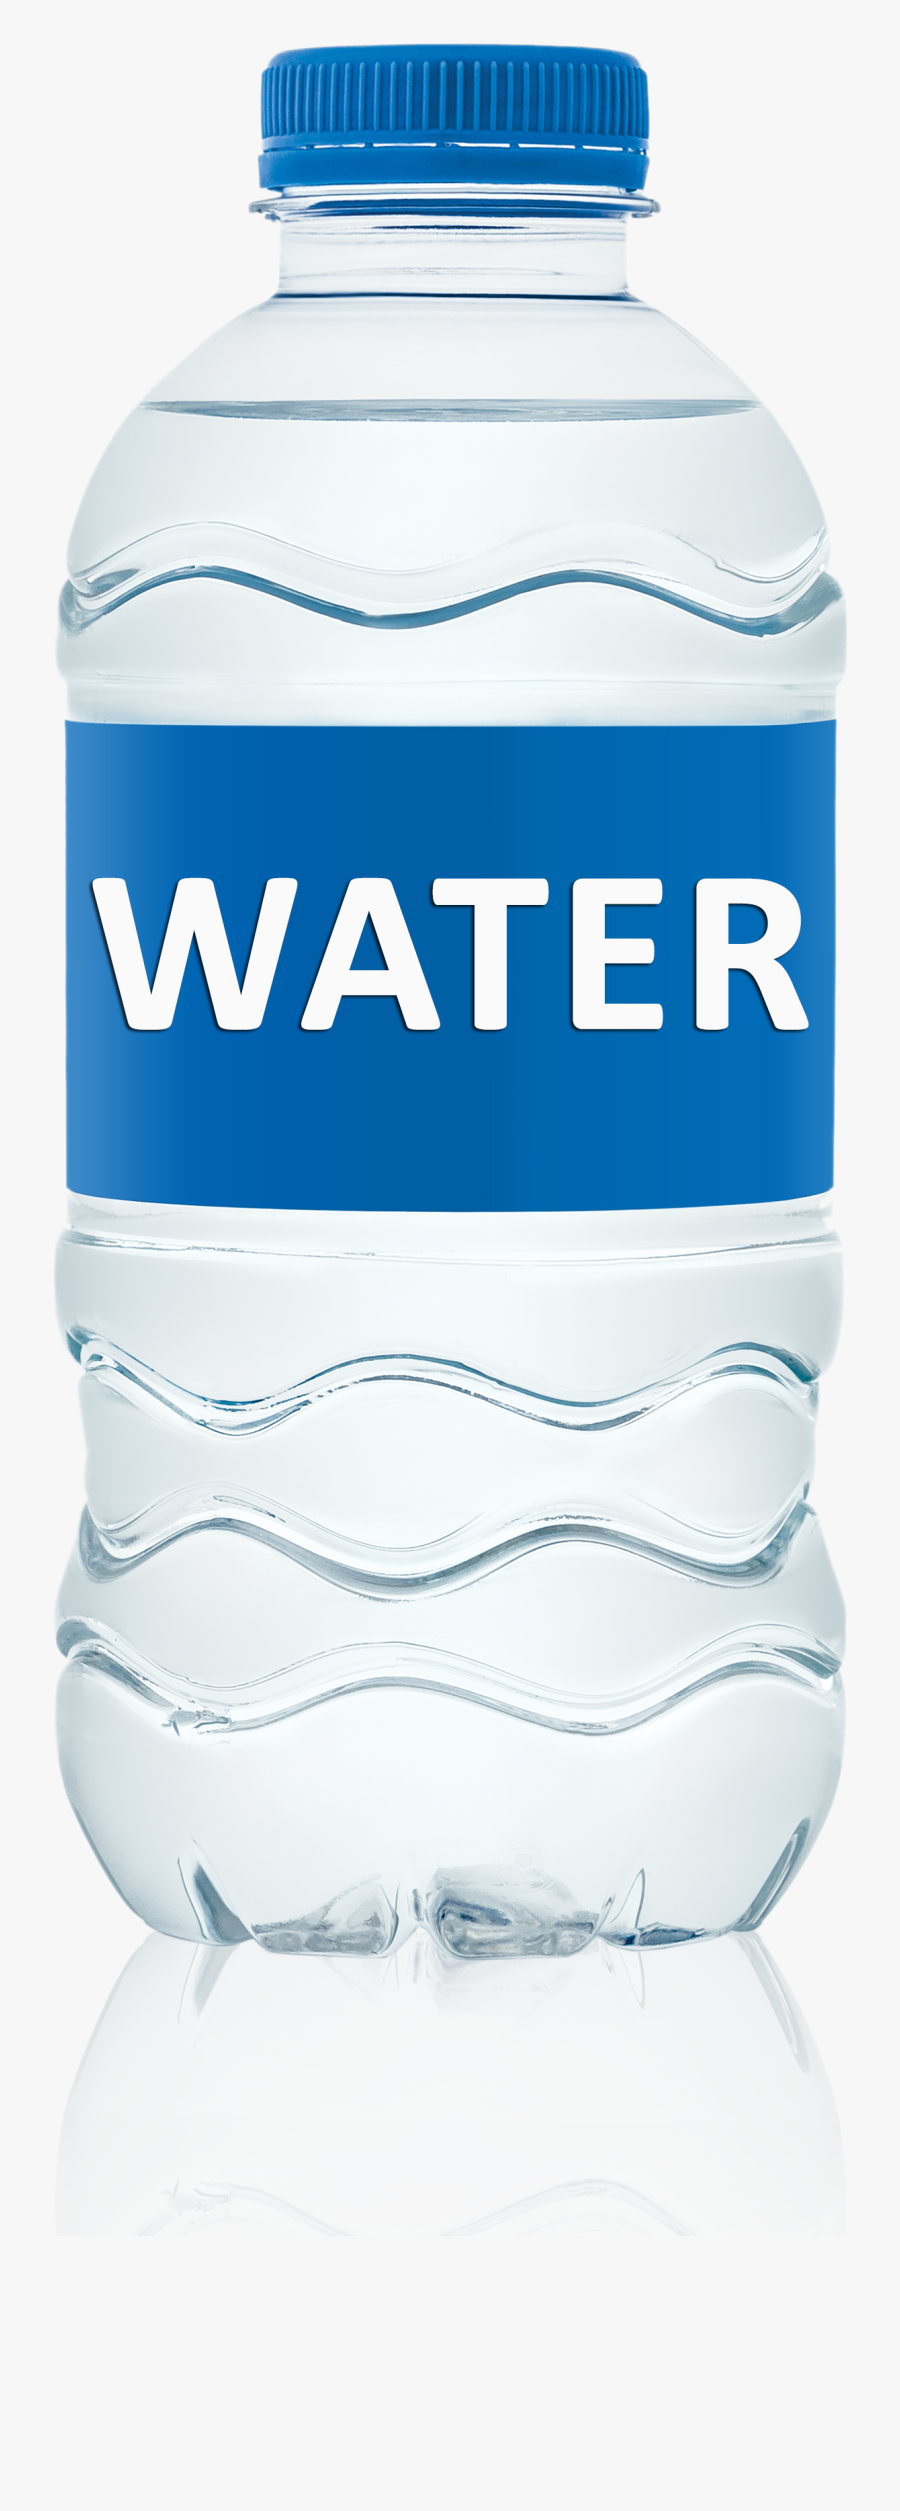 Water Bottle Vector - Transparent Background Water Bottle Png, Transparent Clipart